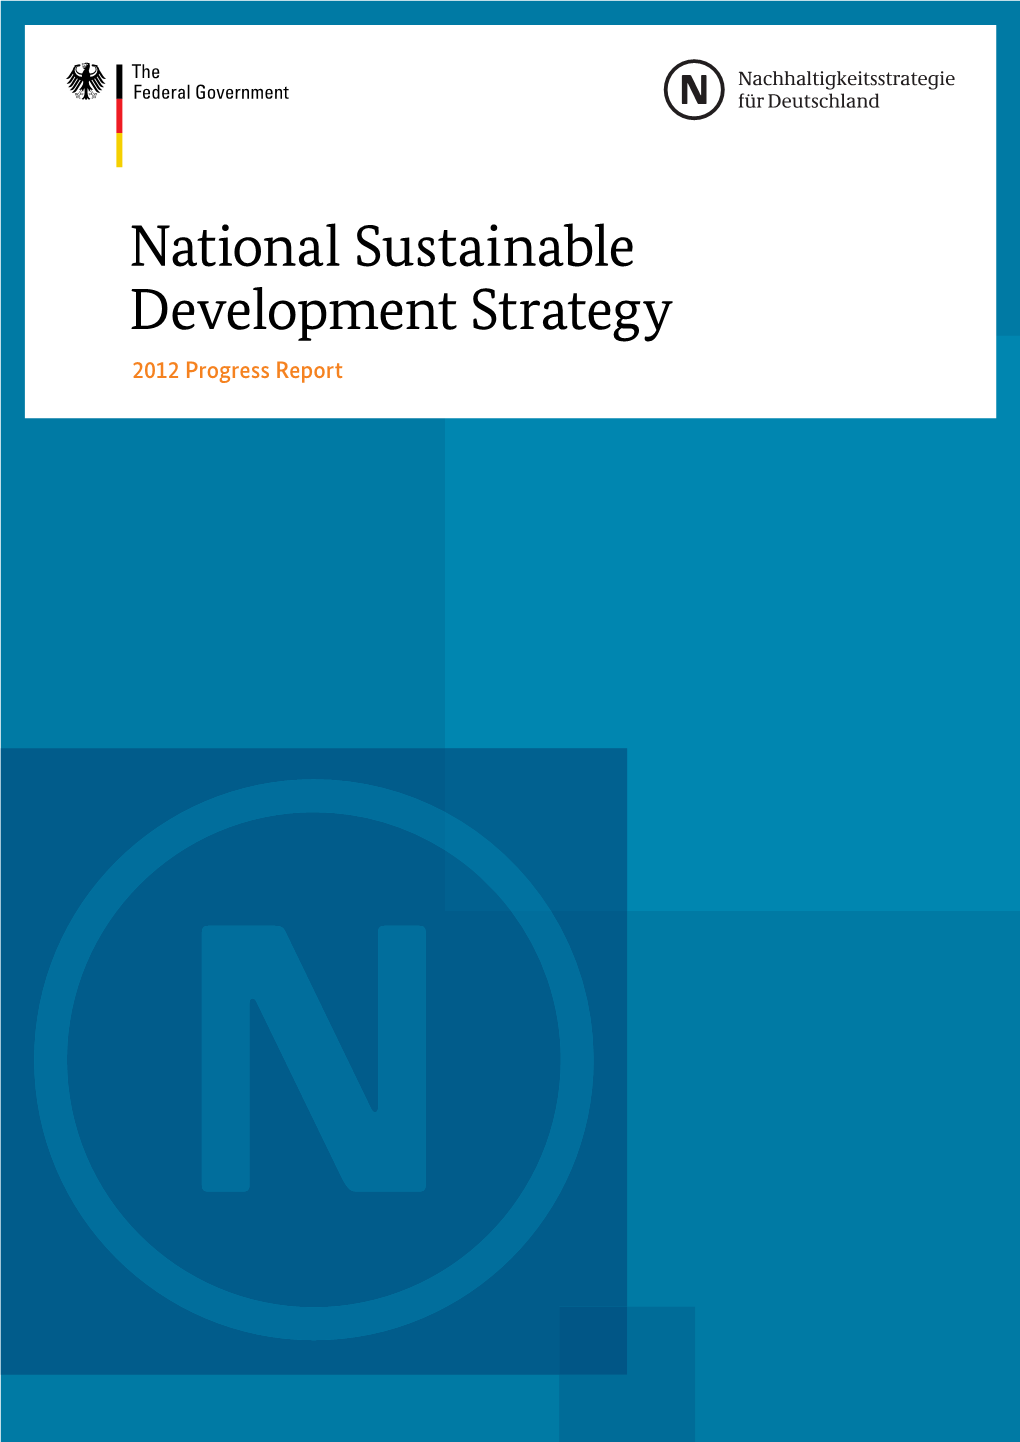 National Sustainable Development Strategy Progress